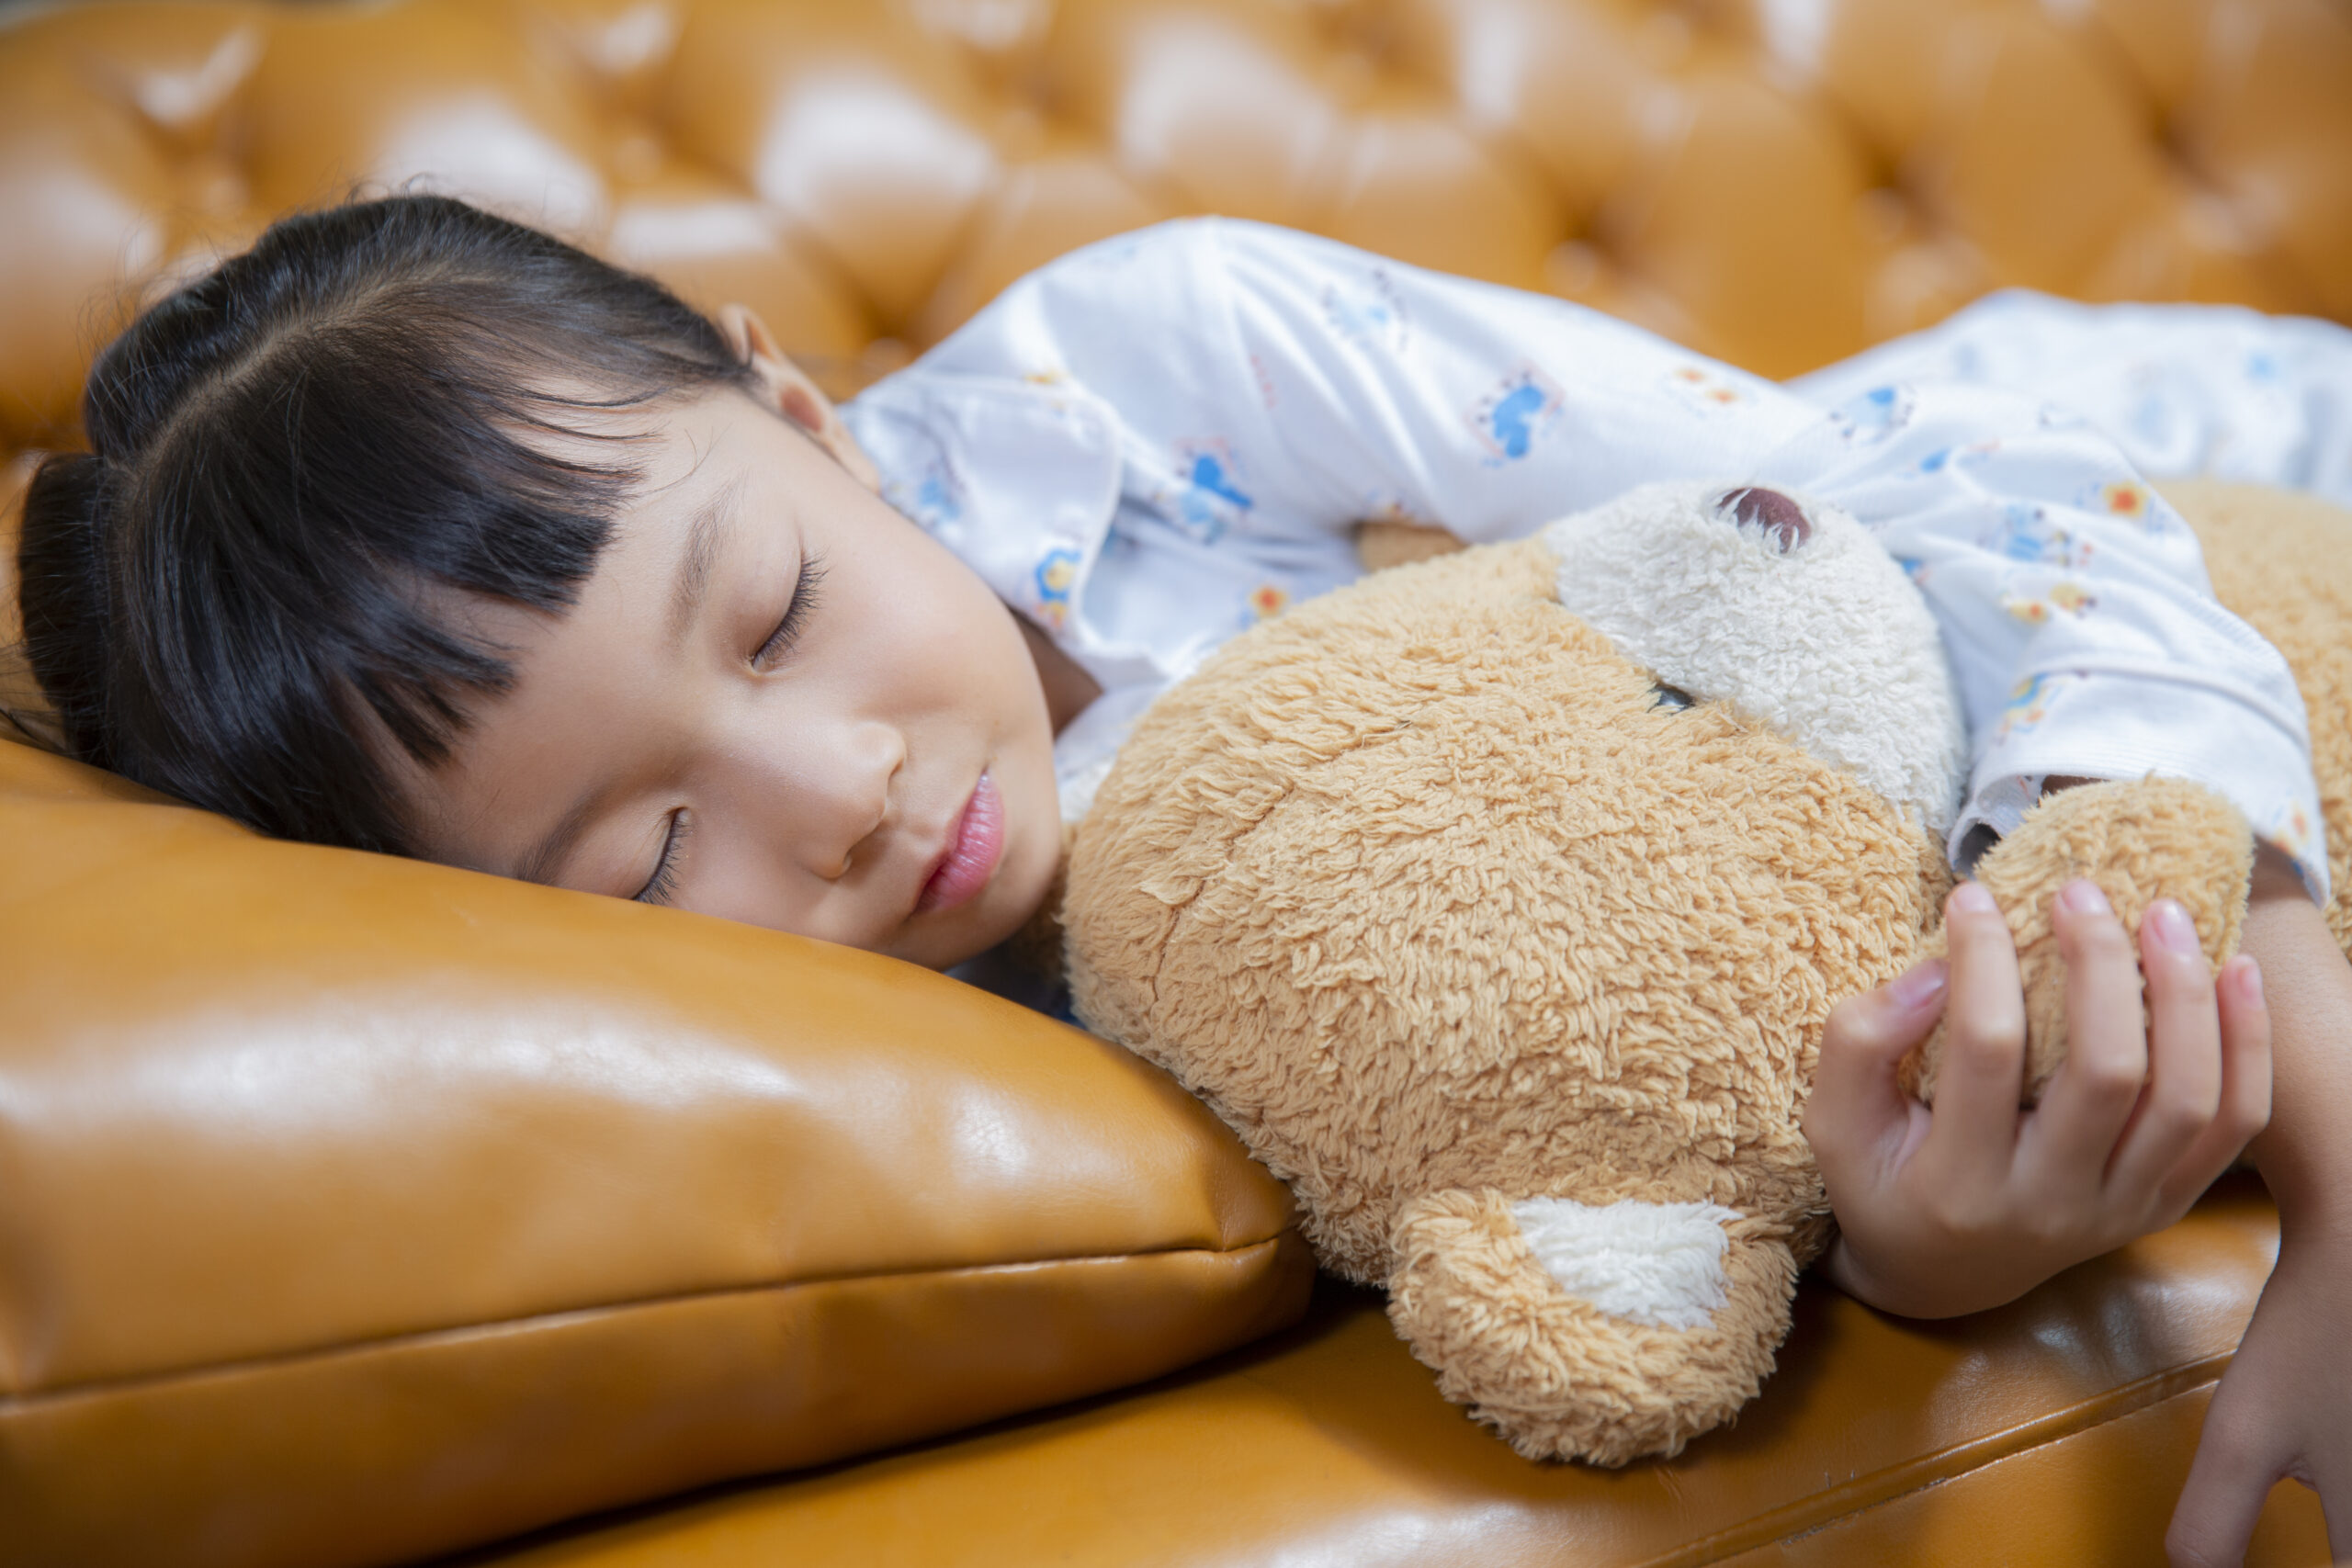 Young girl sleeping with teddy bear on sofa